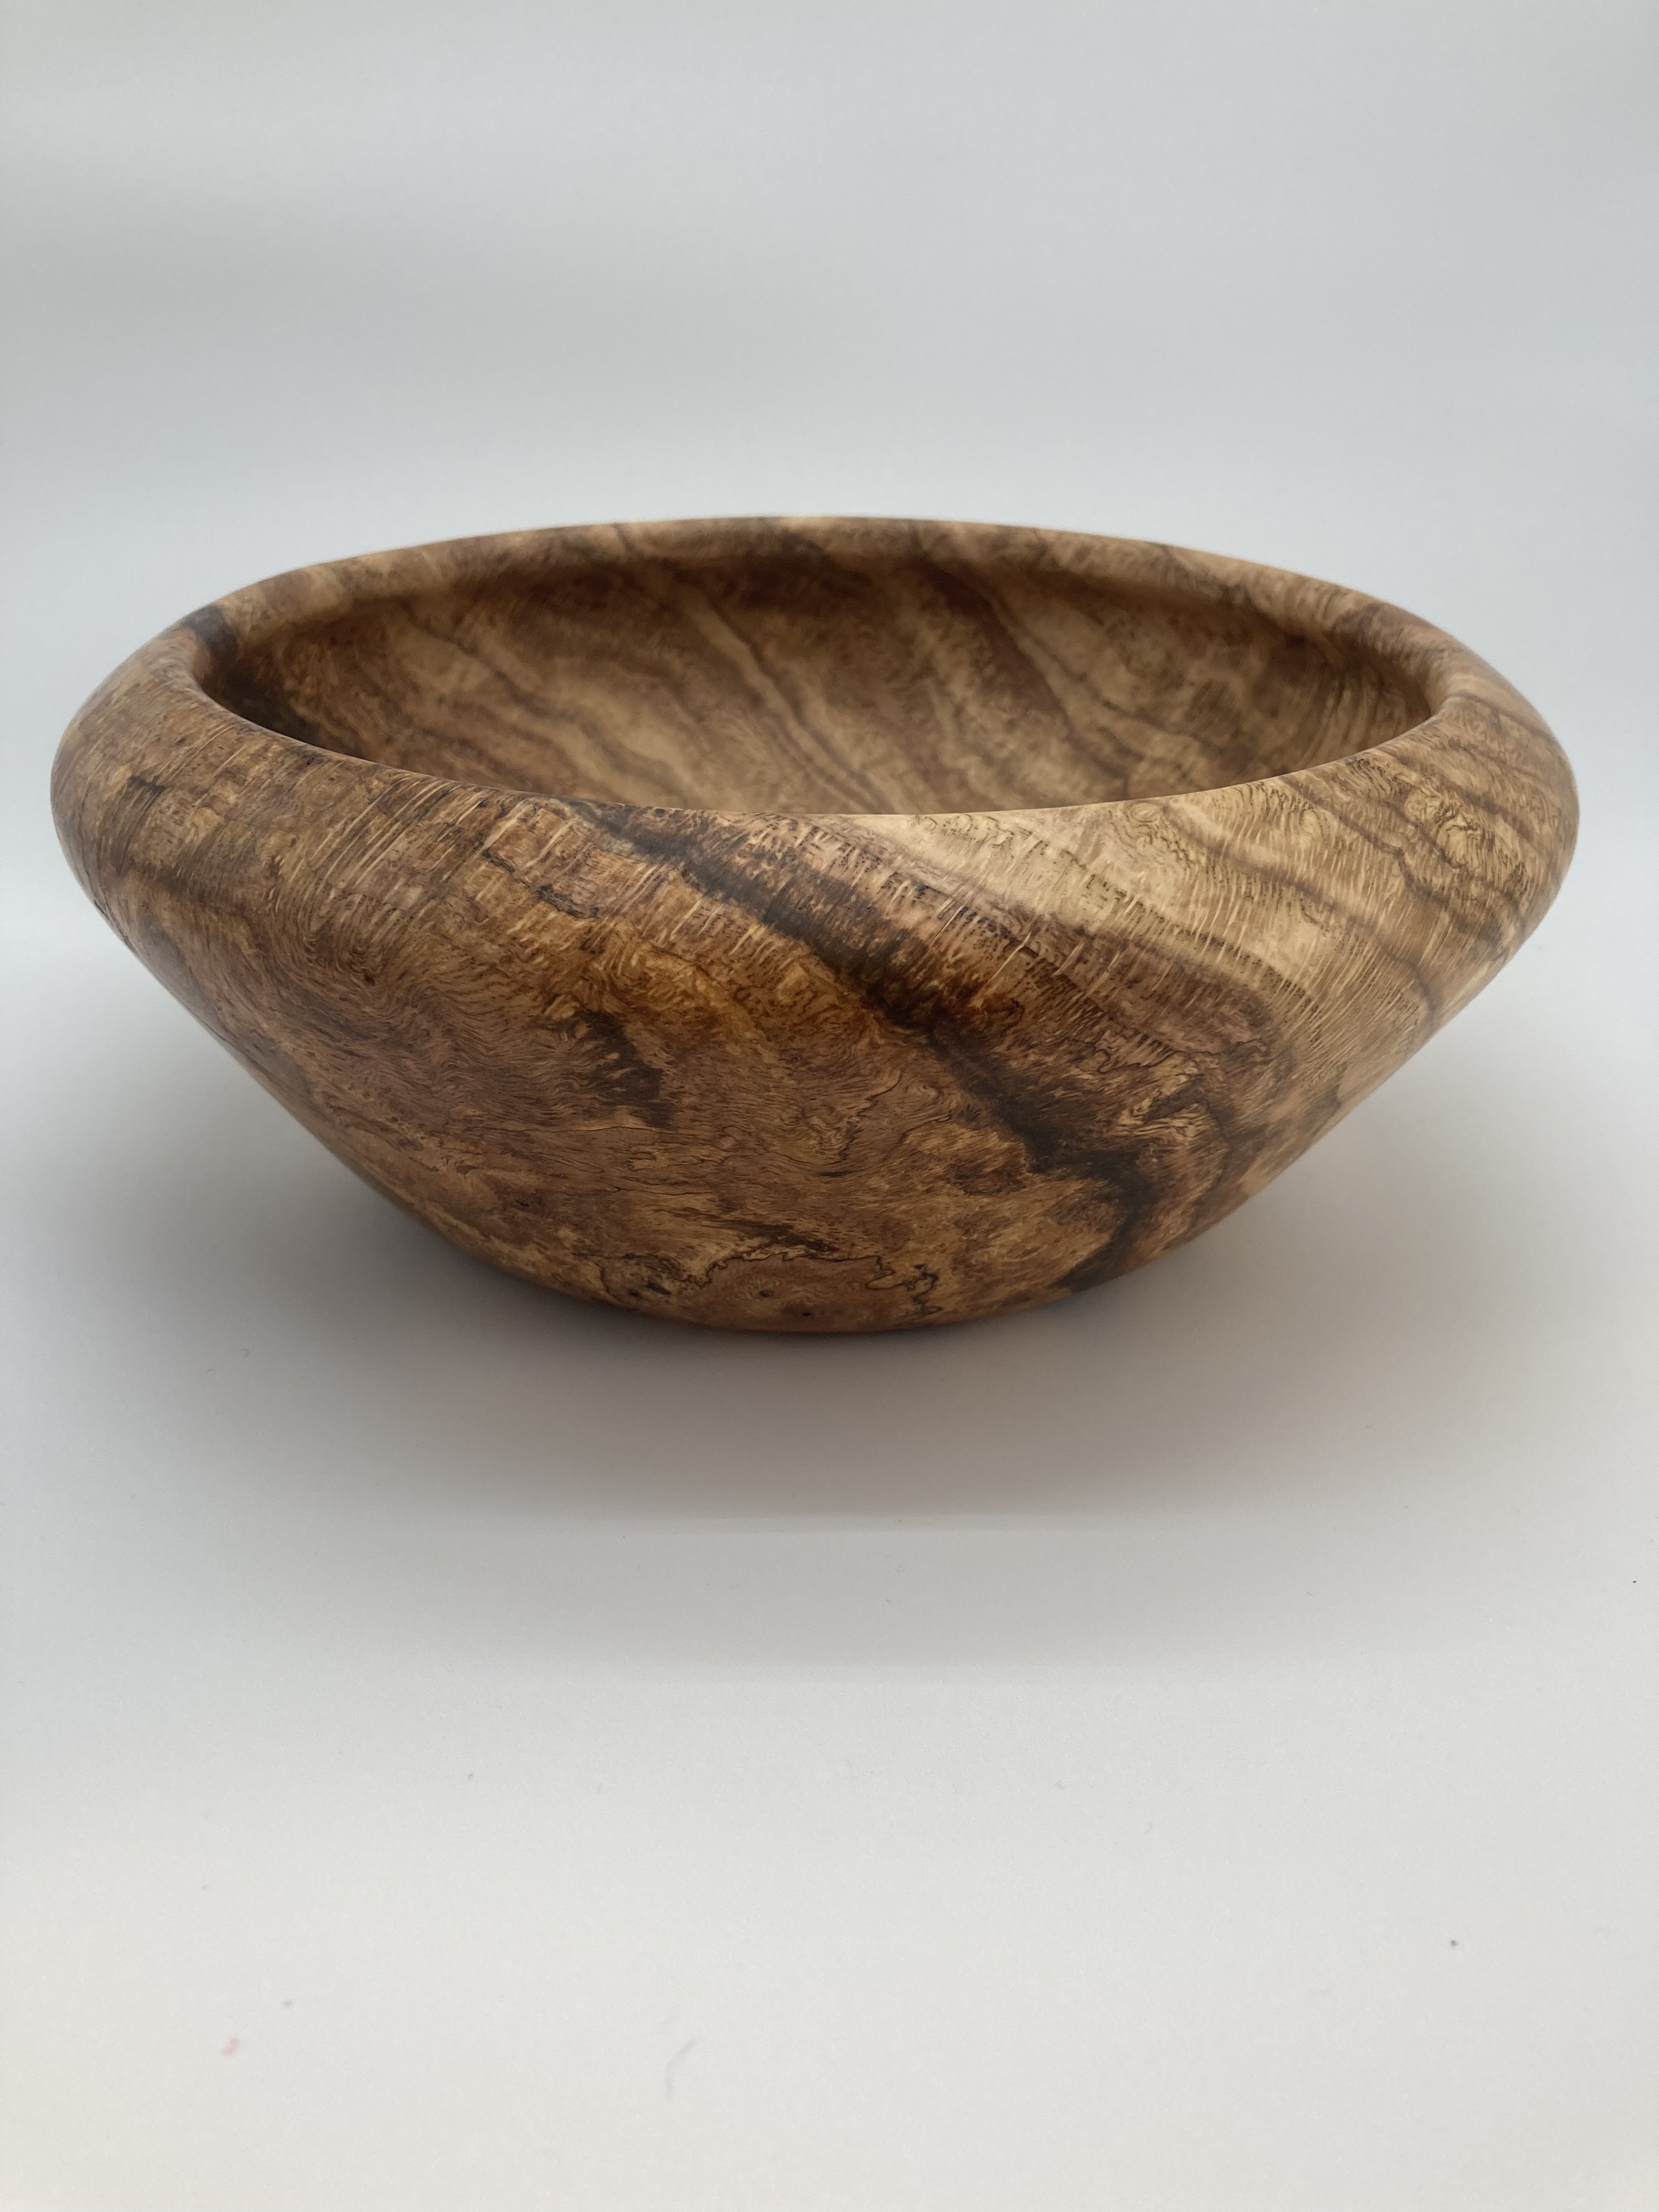 bowl 2.jpg